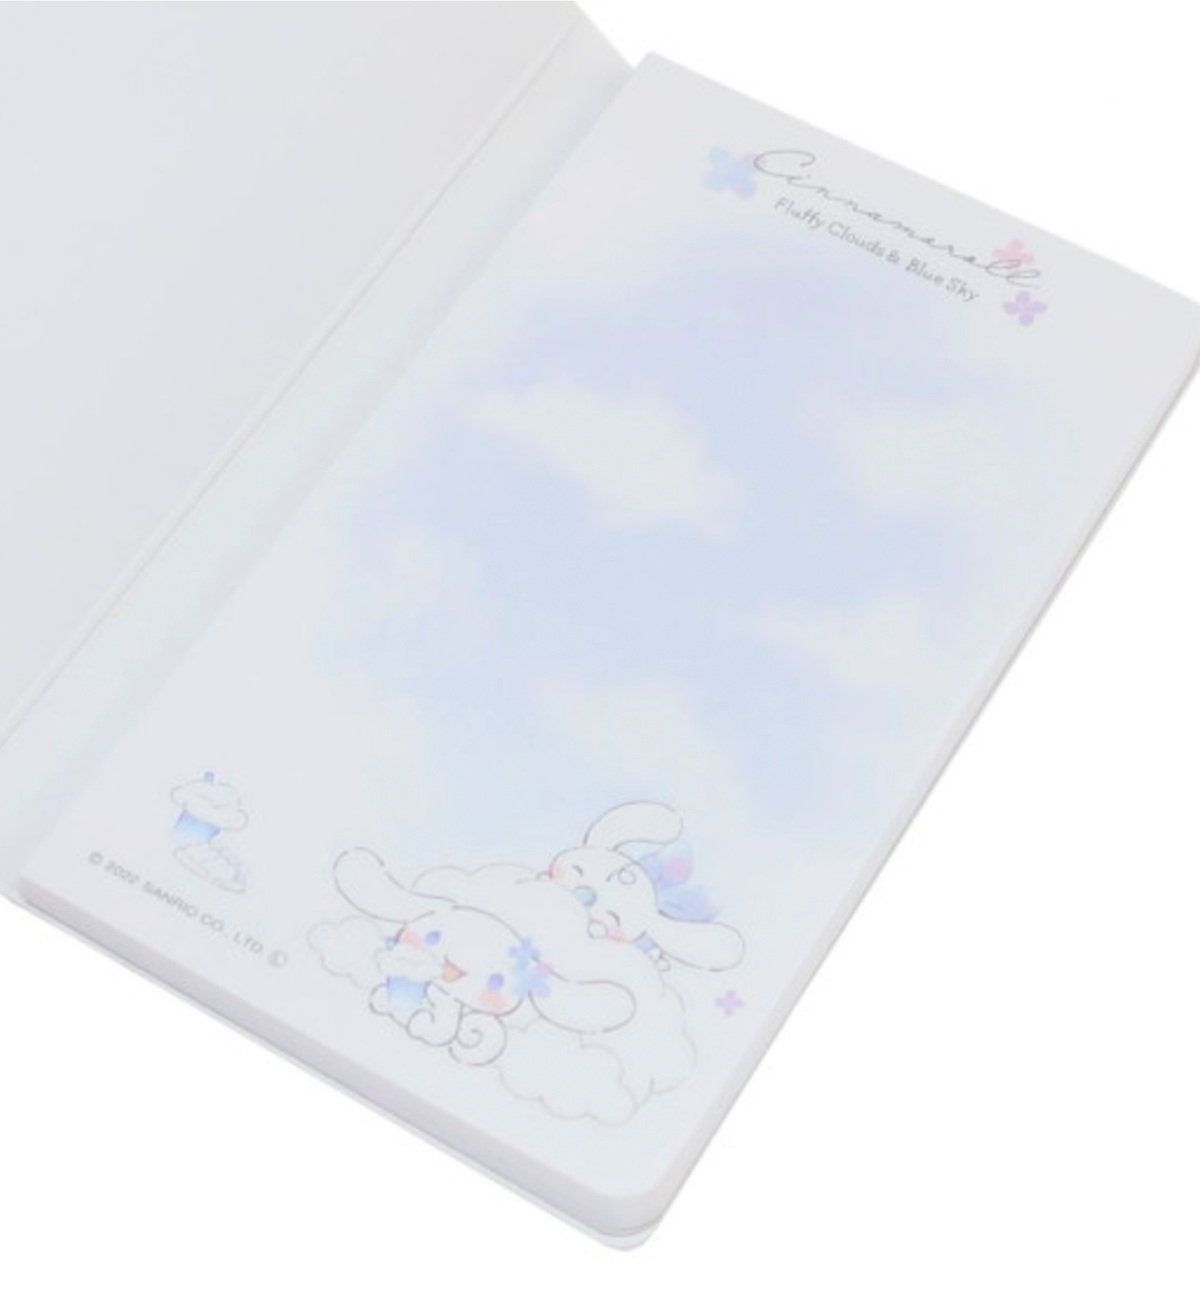 Sanrio Booklet Memopad [Cinnamoroll/Sky Blue]